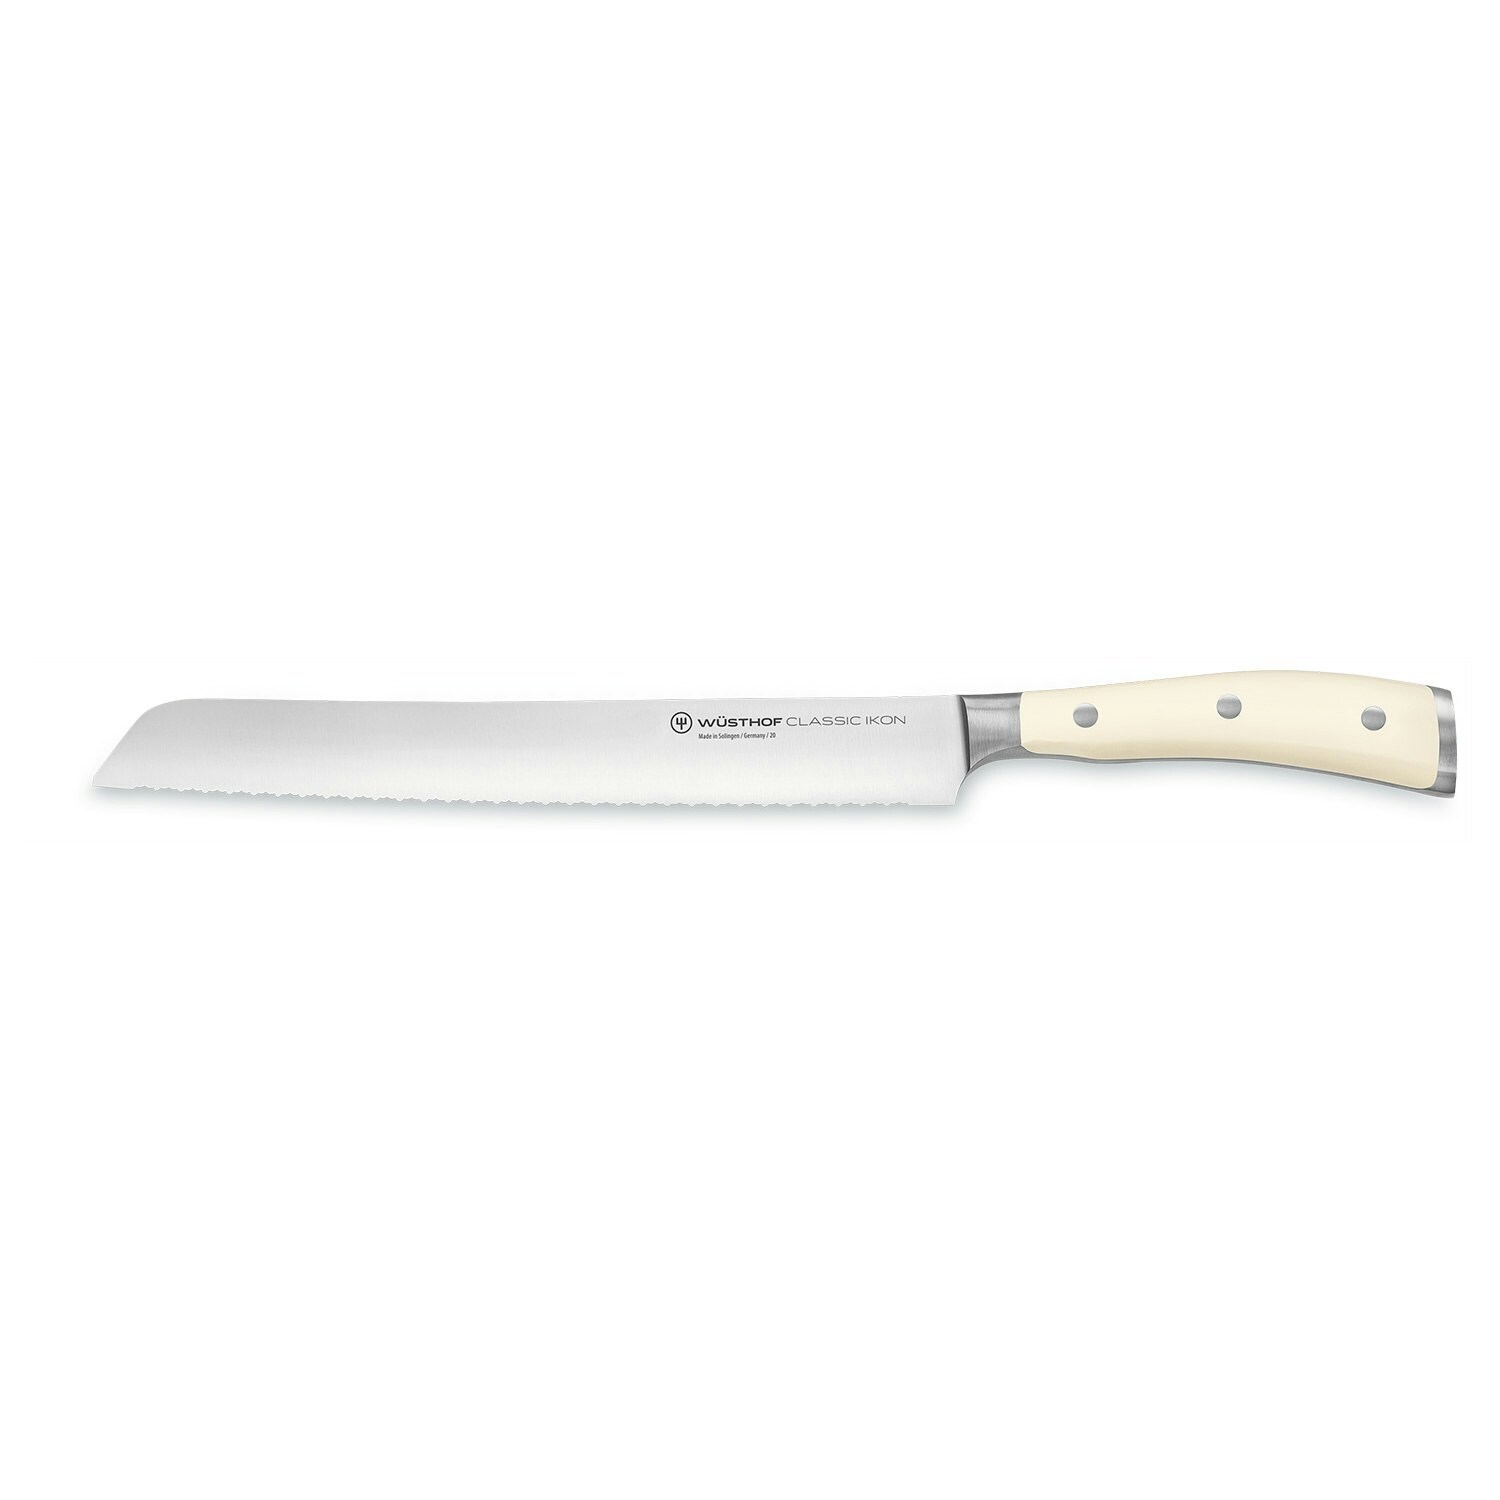 https://royaldesign.com/image/2/wusthof-classic-ikon-creme-bread-knife-23-cm-0